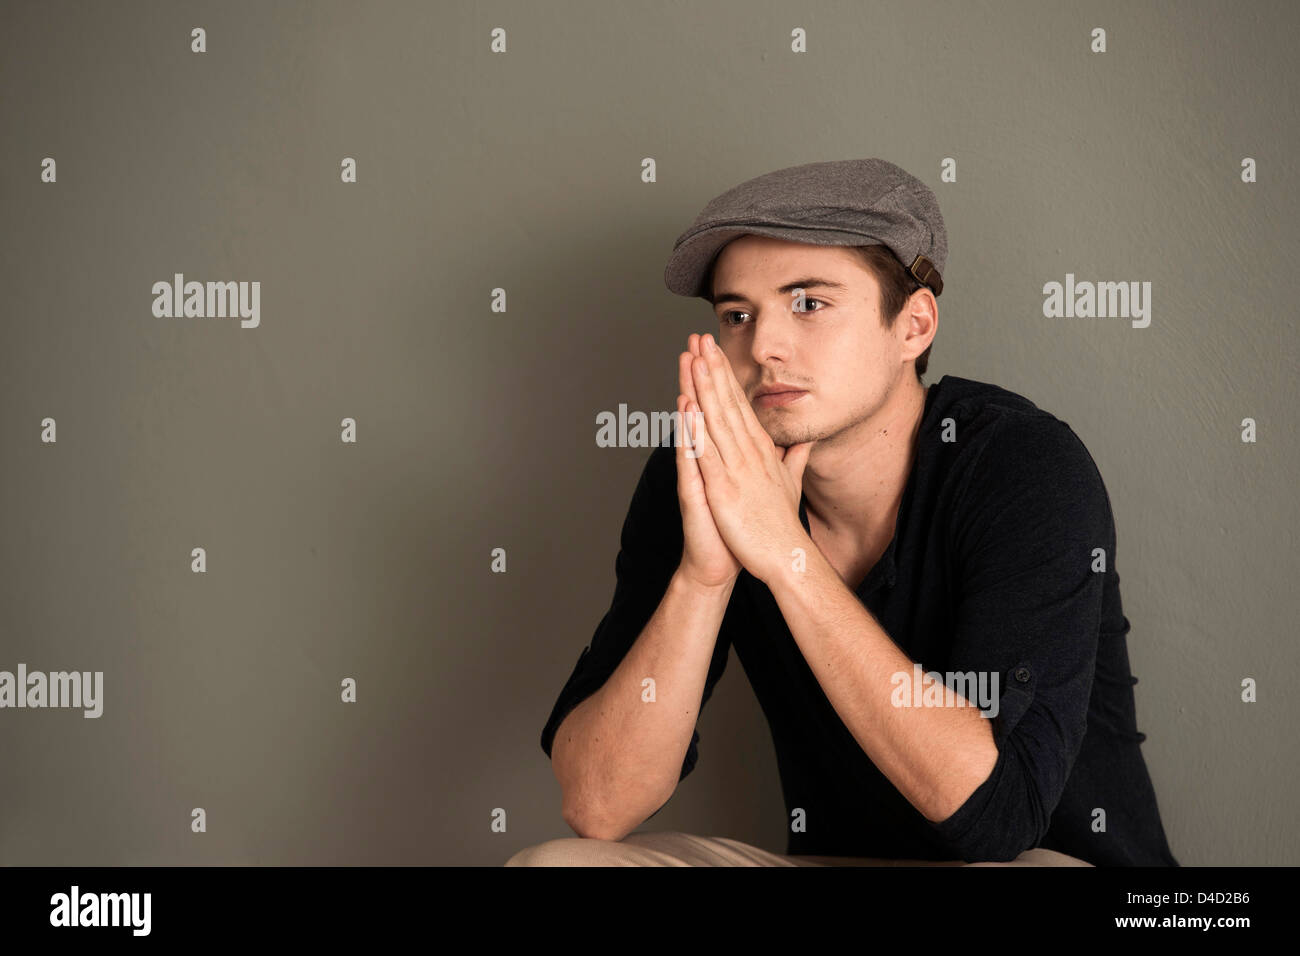 Thoughtful young man wearing cap Stock Photo